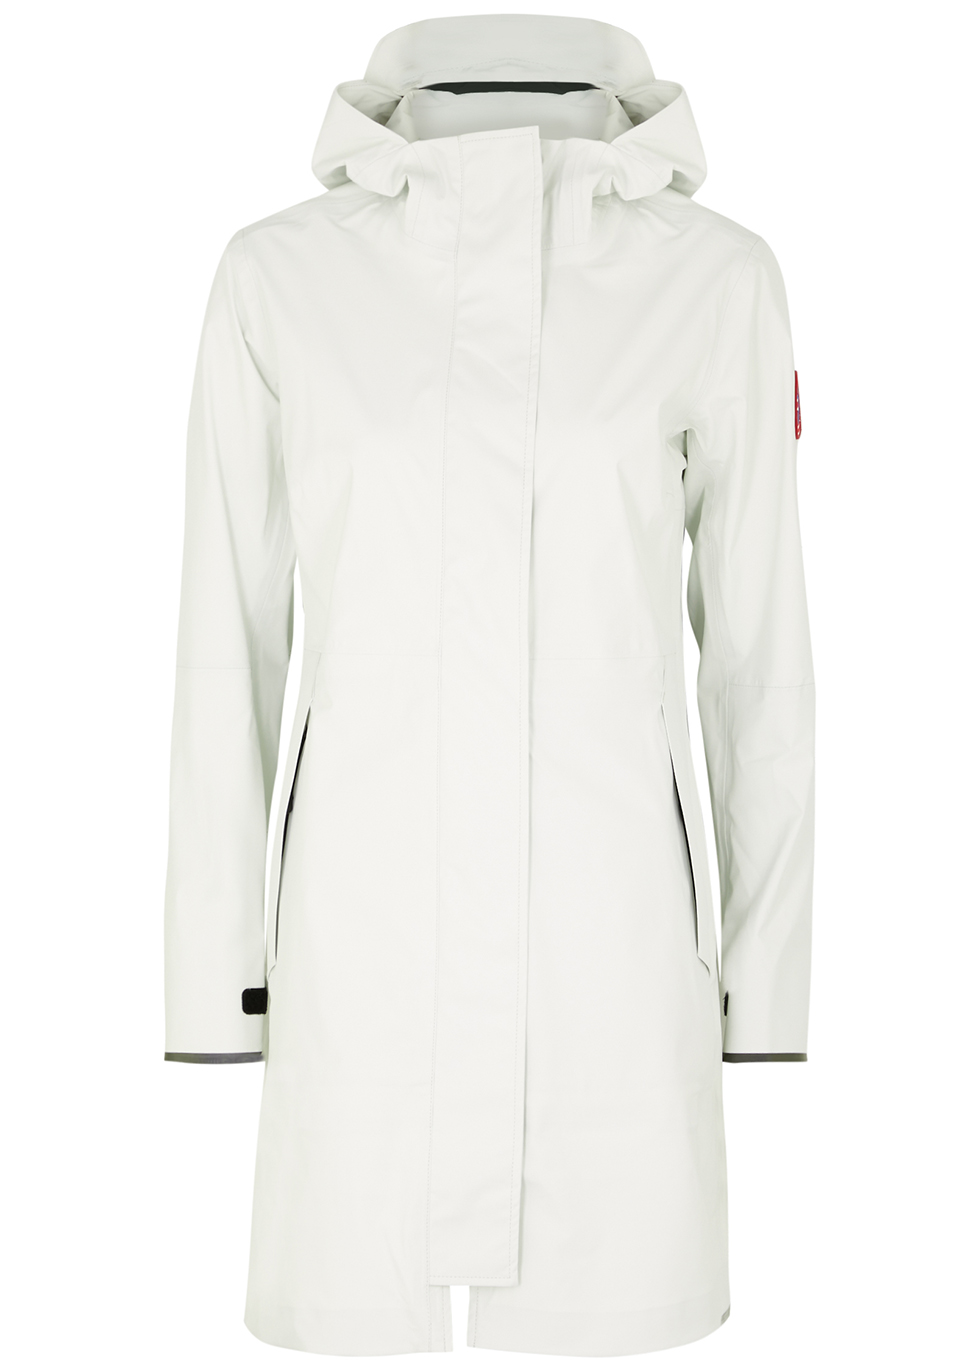 Salida white Tri-Durance® shell jacket